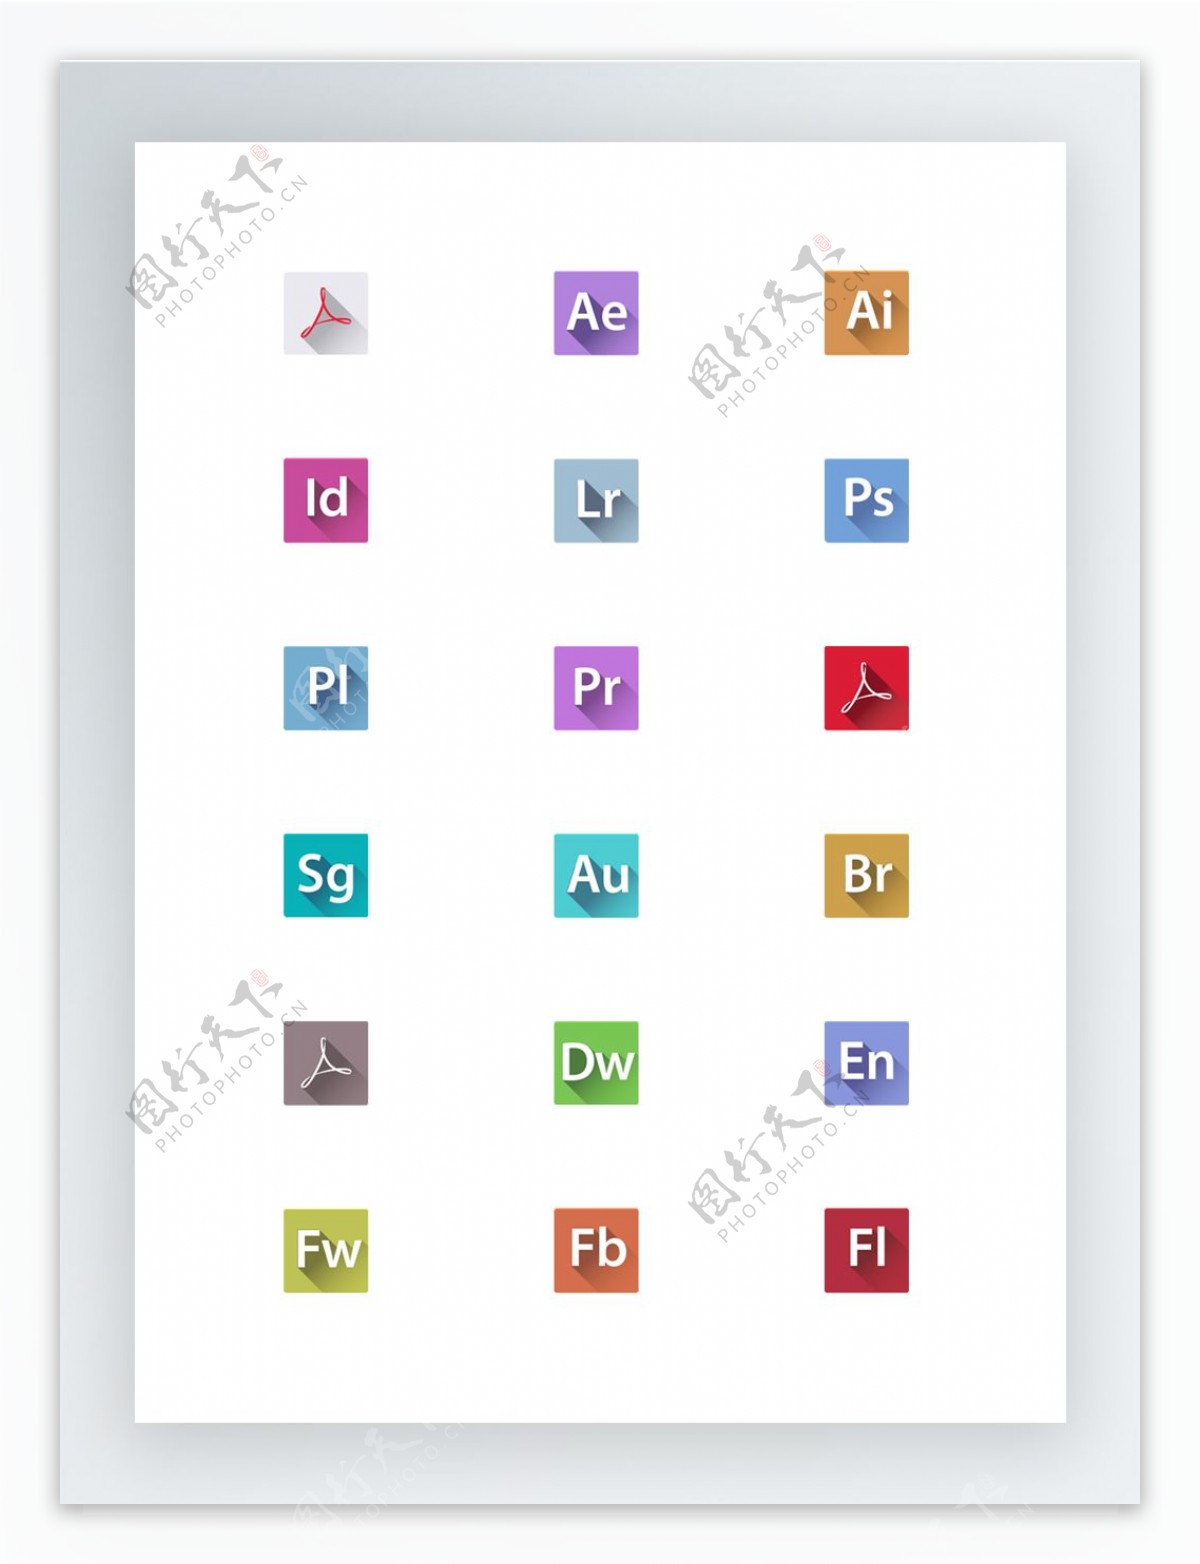 Adobe公司CS6软件图标